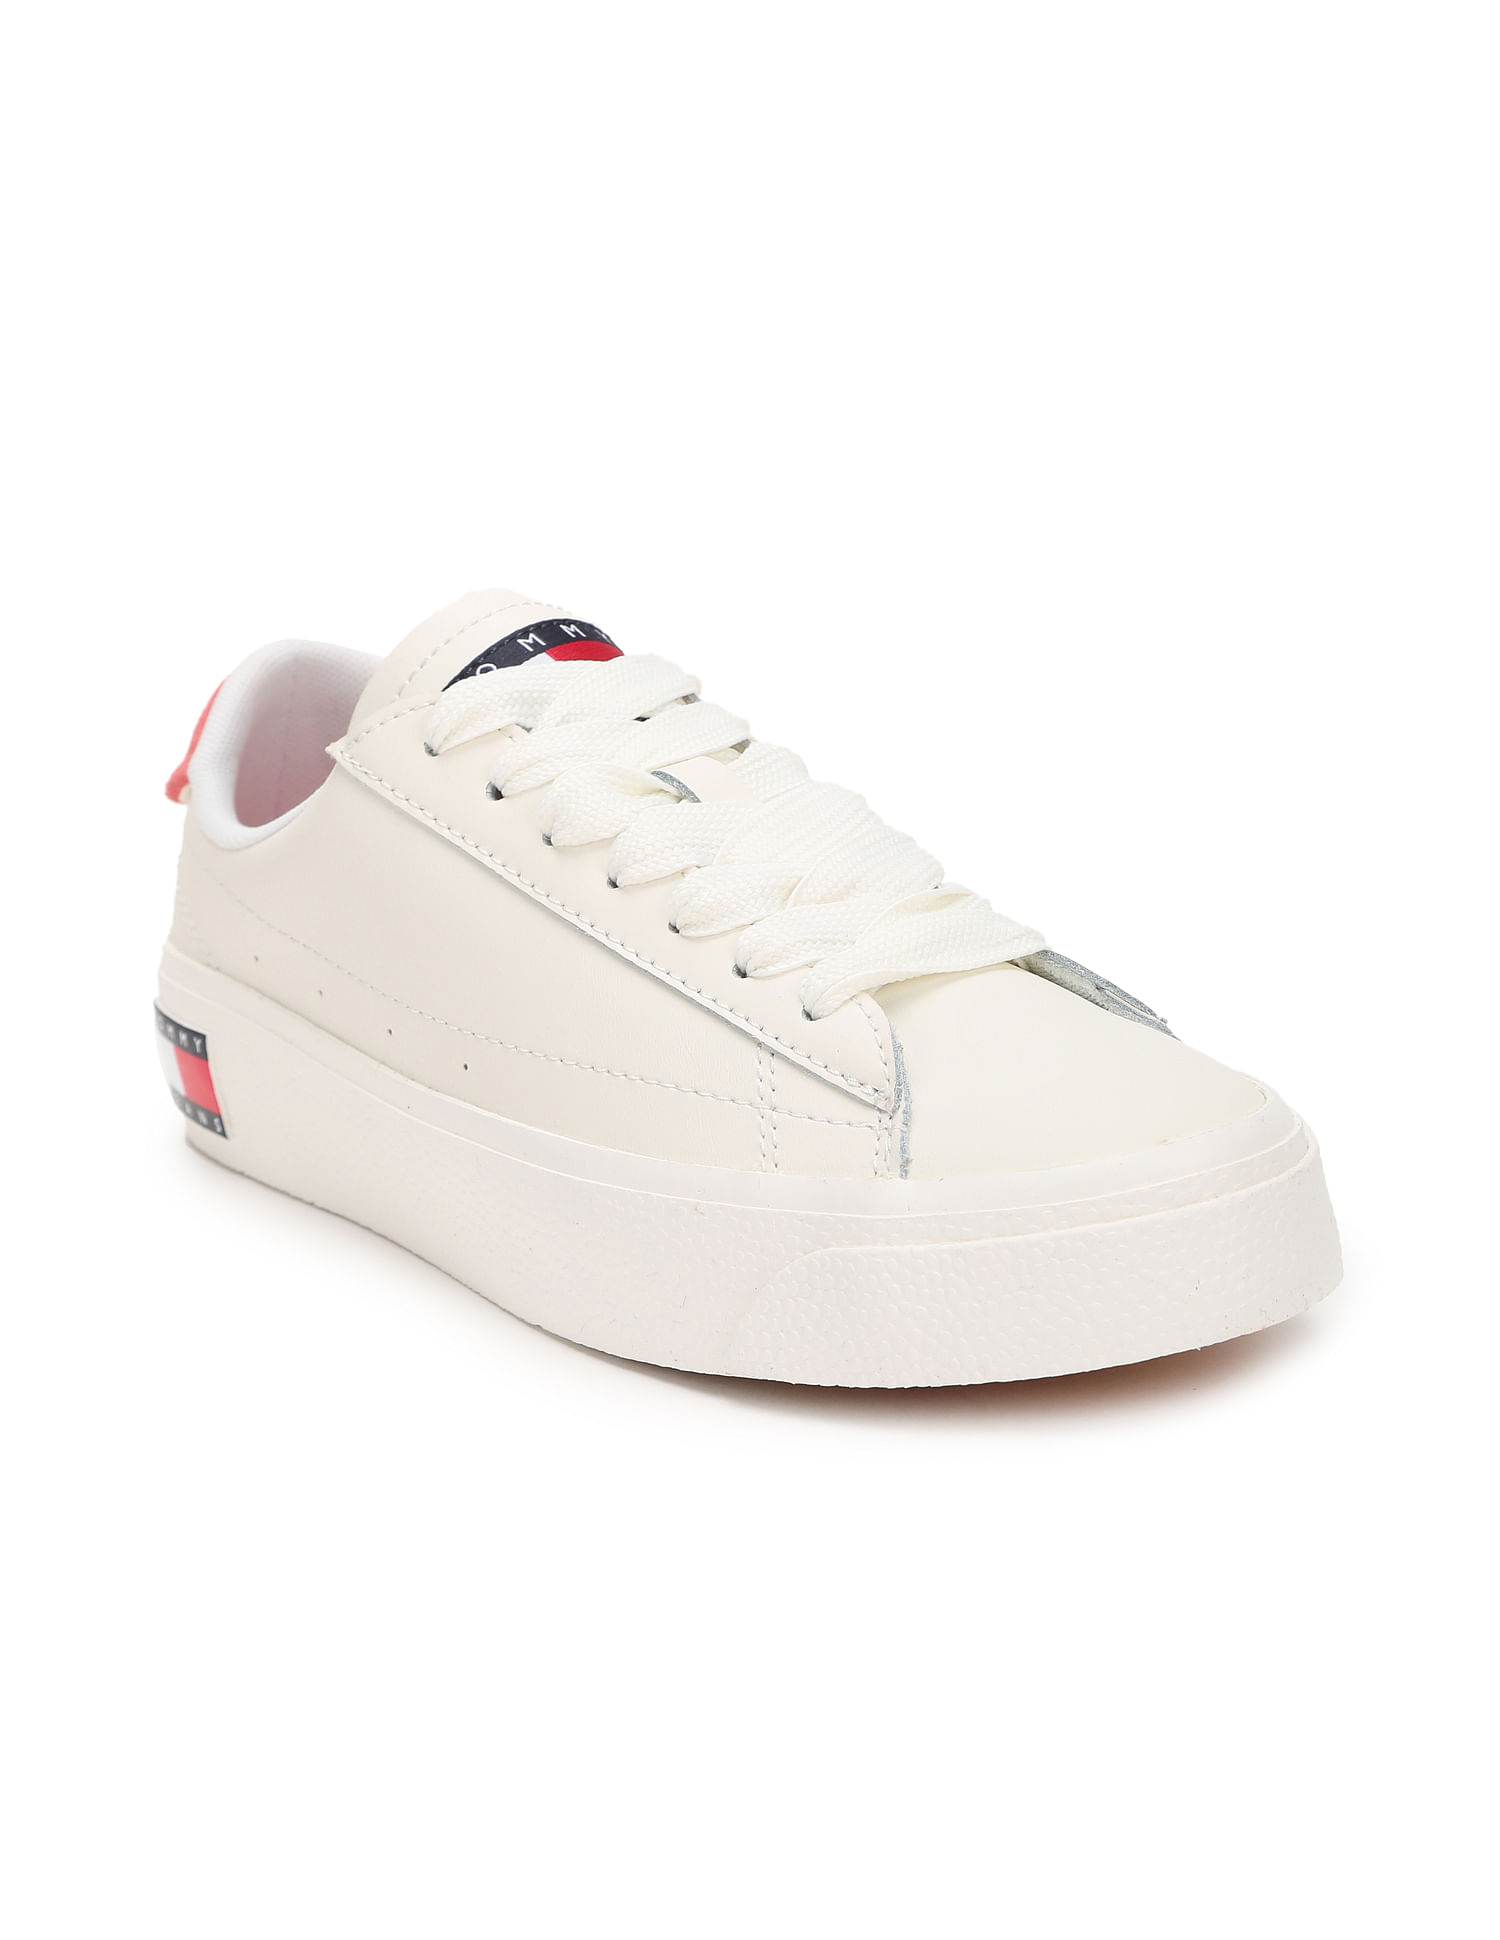 Gubotare Women Shoes Womens White PU Leather Sneakers Low Top Tennis Shoes  Casual Walking Shoes,Pink 8.5 - Walmart.com